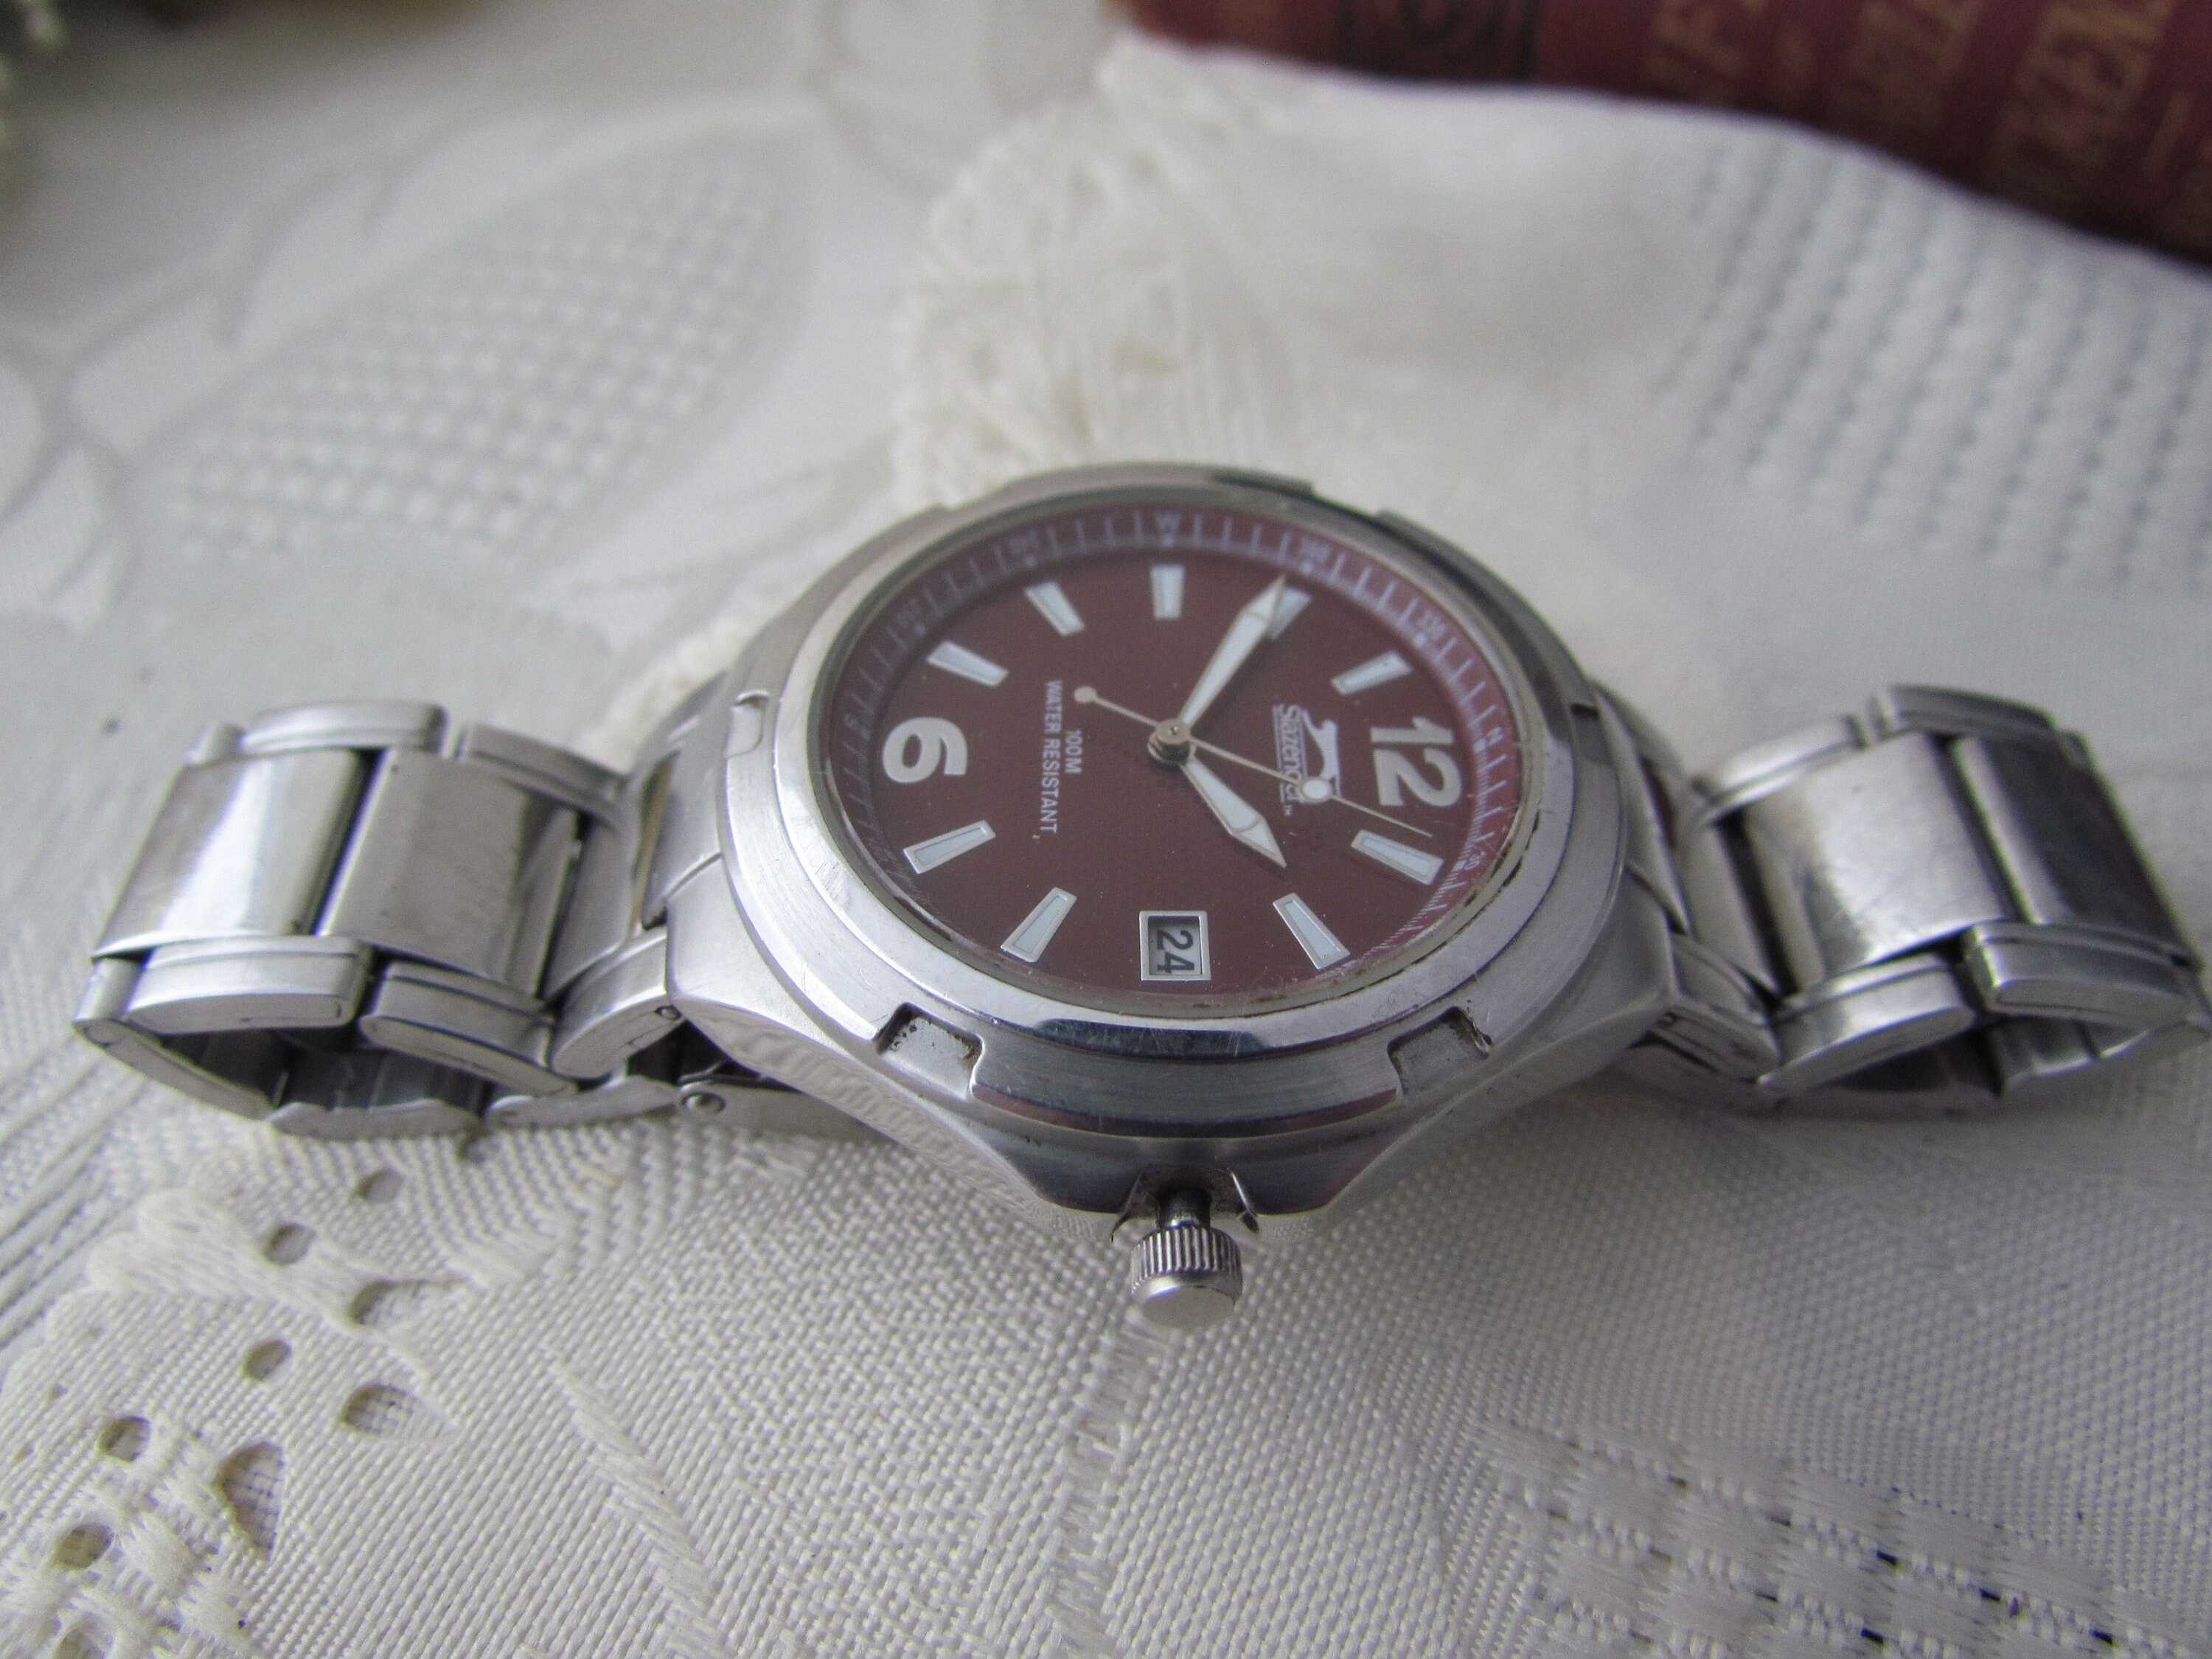 SLAZENGER Water Resistant Wristwatch Men's Stainless Steel Bracelet Sports  Watch in Good Condition - Etsy